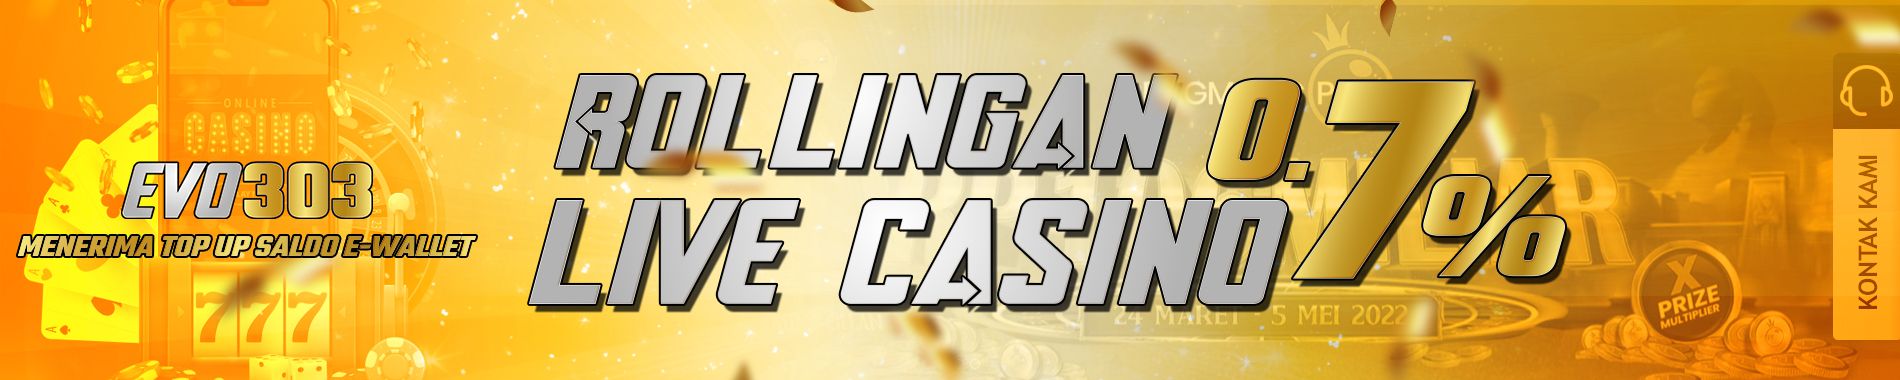 bonus rollingan live casino